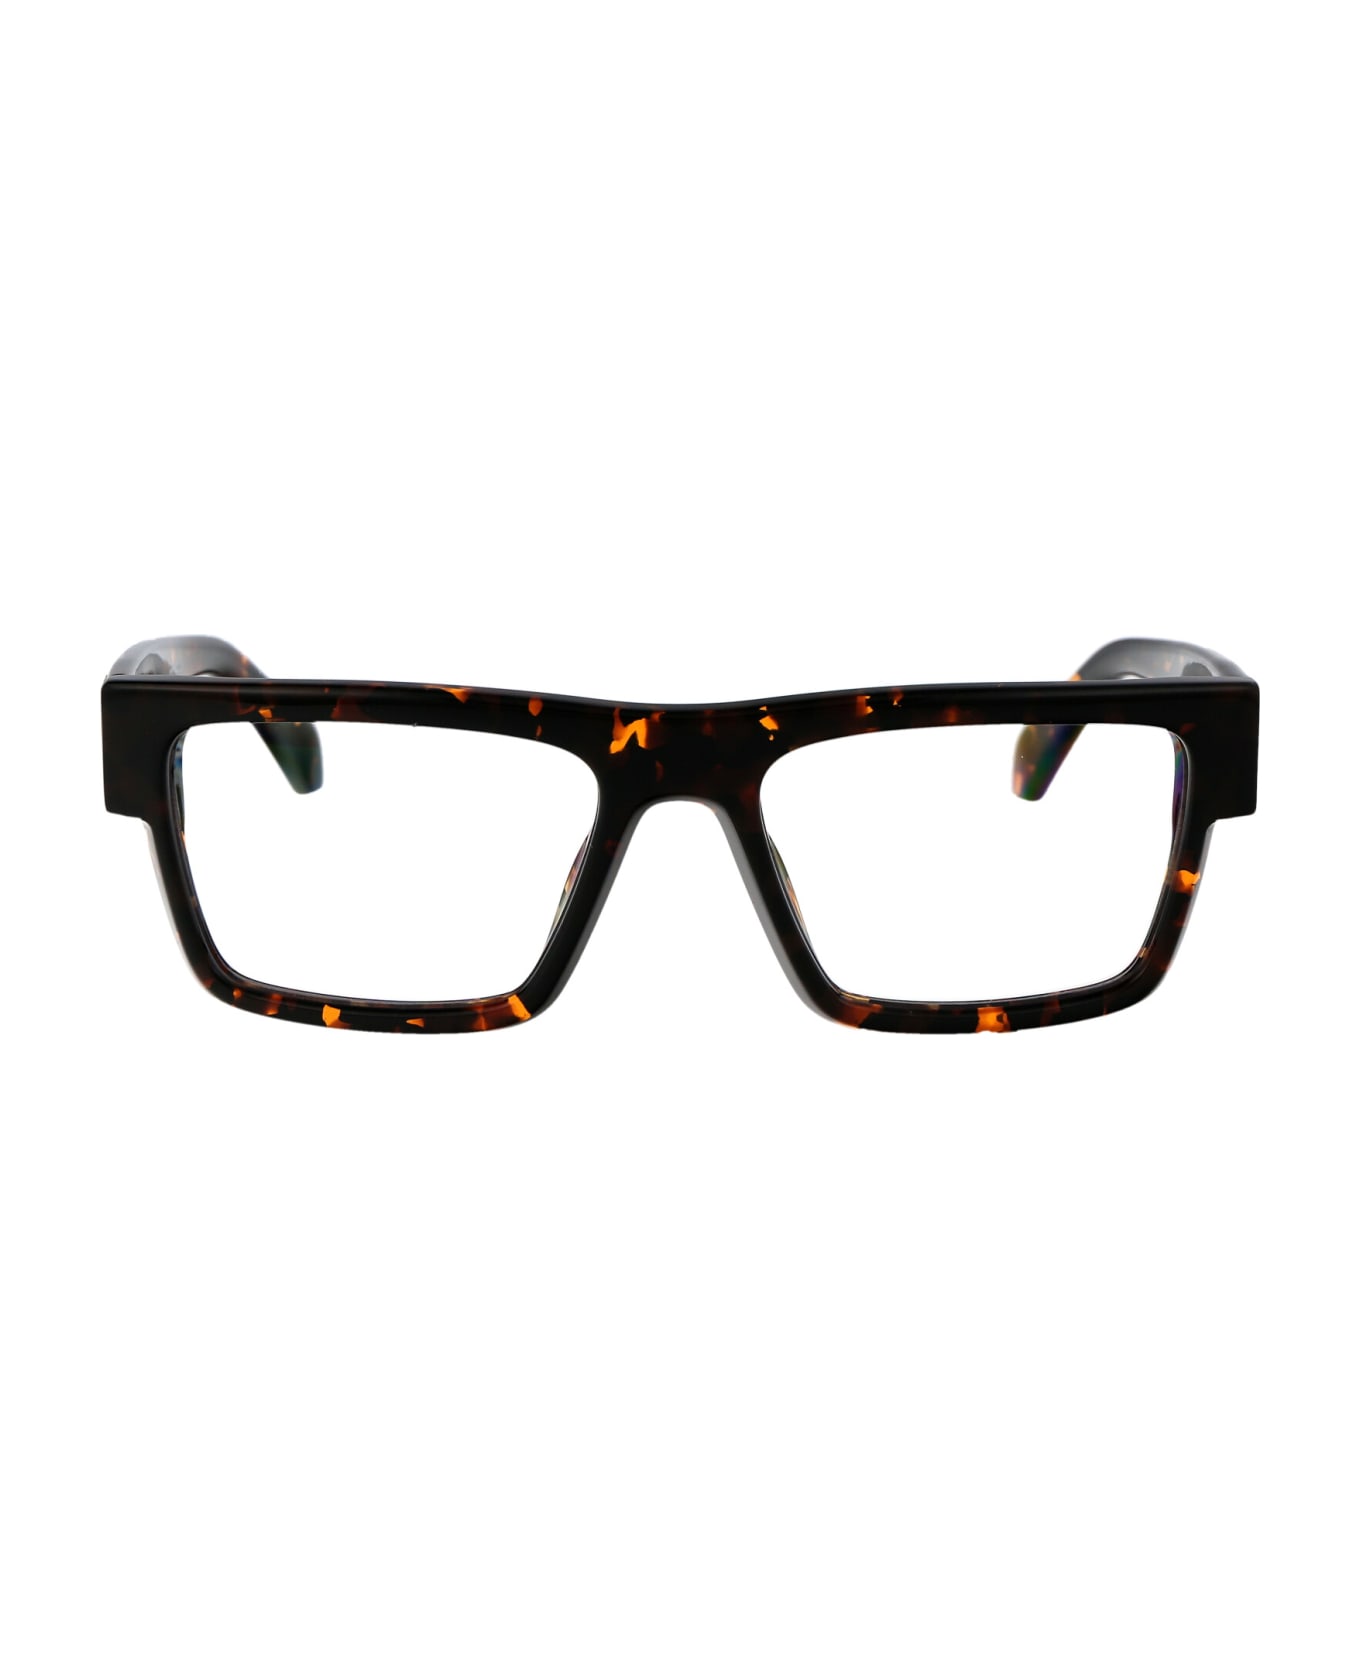 Off-White Optical Style 61 Glasses - 6000 HAVANA